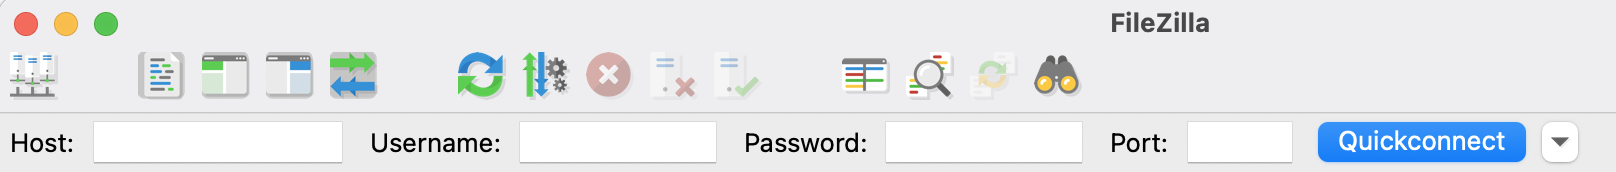 FileZilla menu: host, username, password, port.